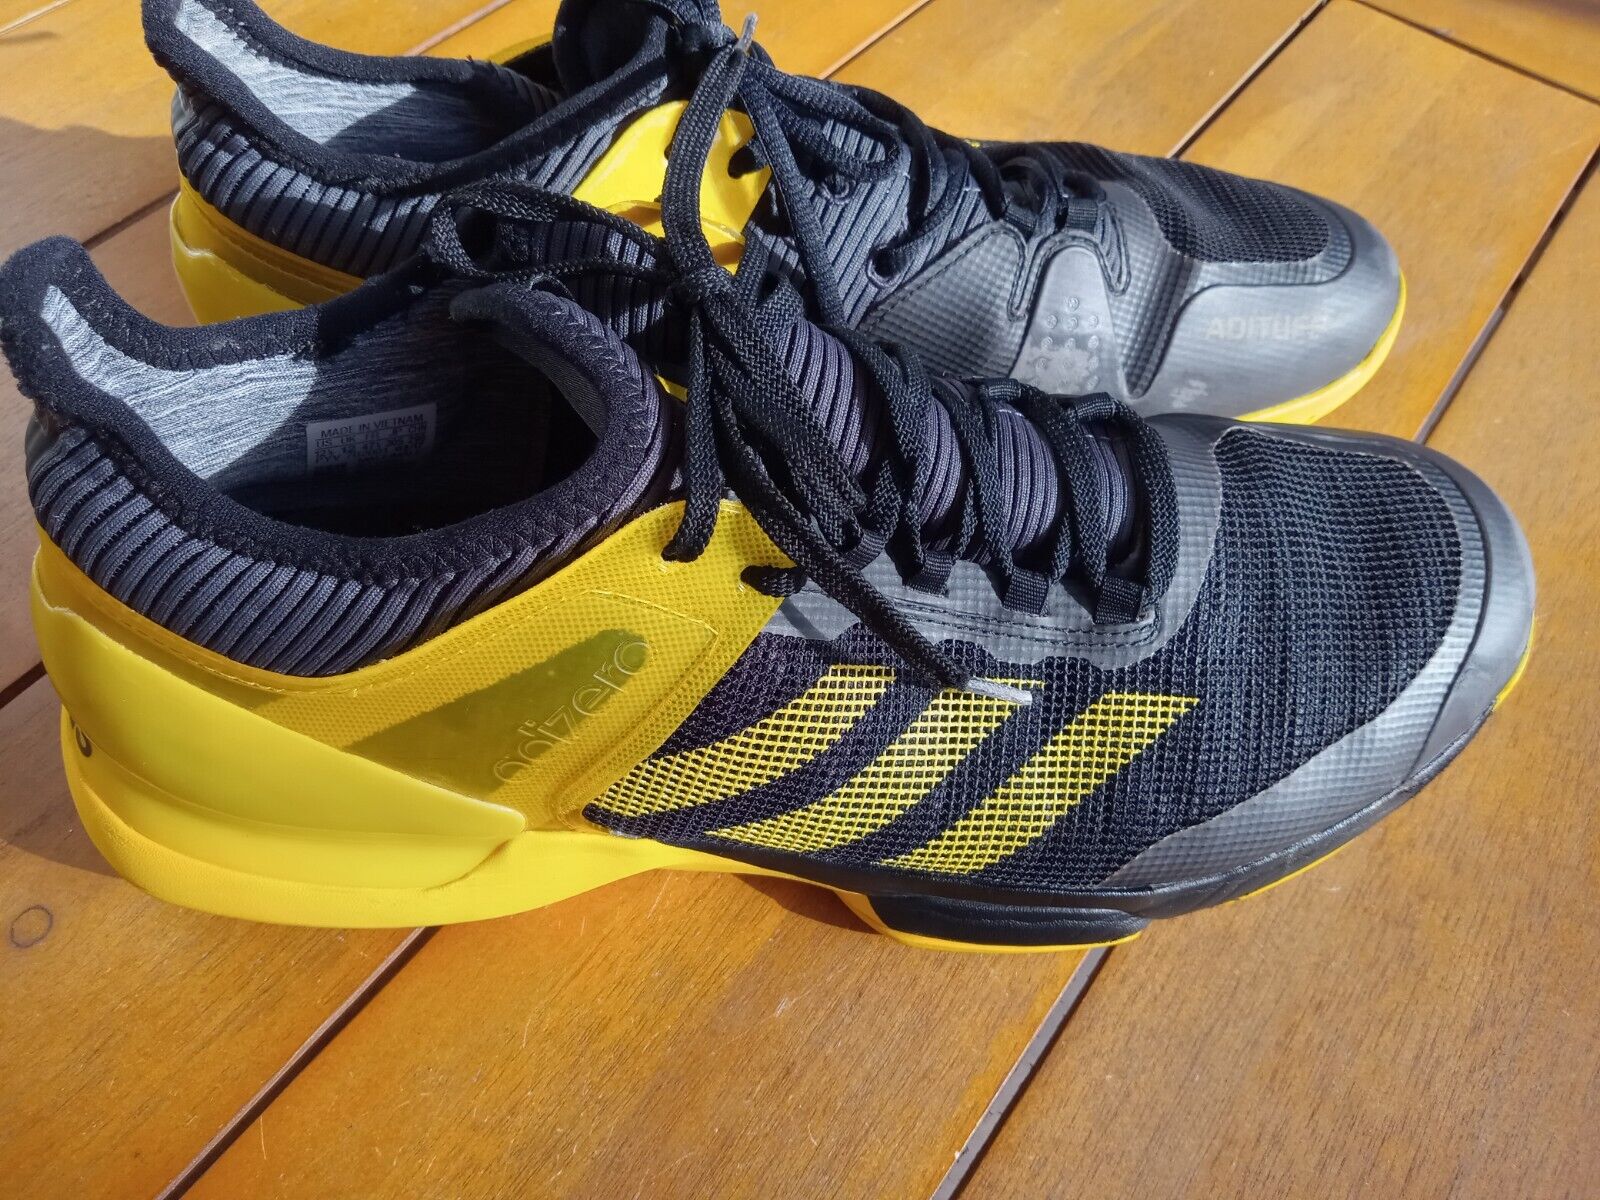 Adidas Mens Adizero Size 12.5 Tennis Shoes Adituff Black/yellow